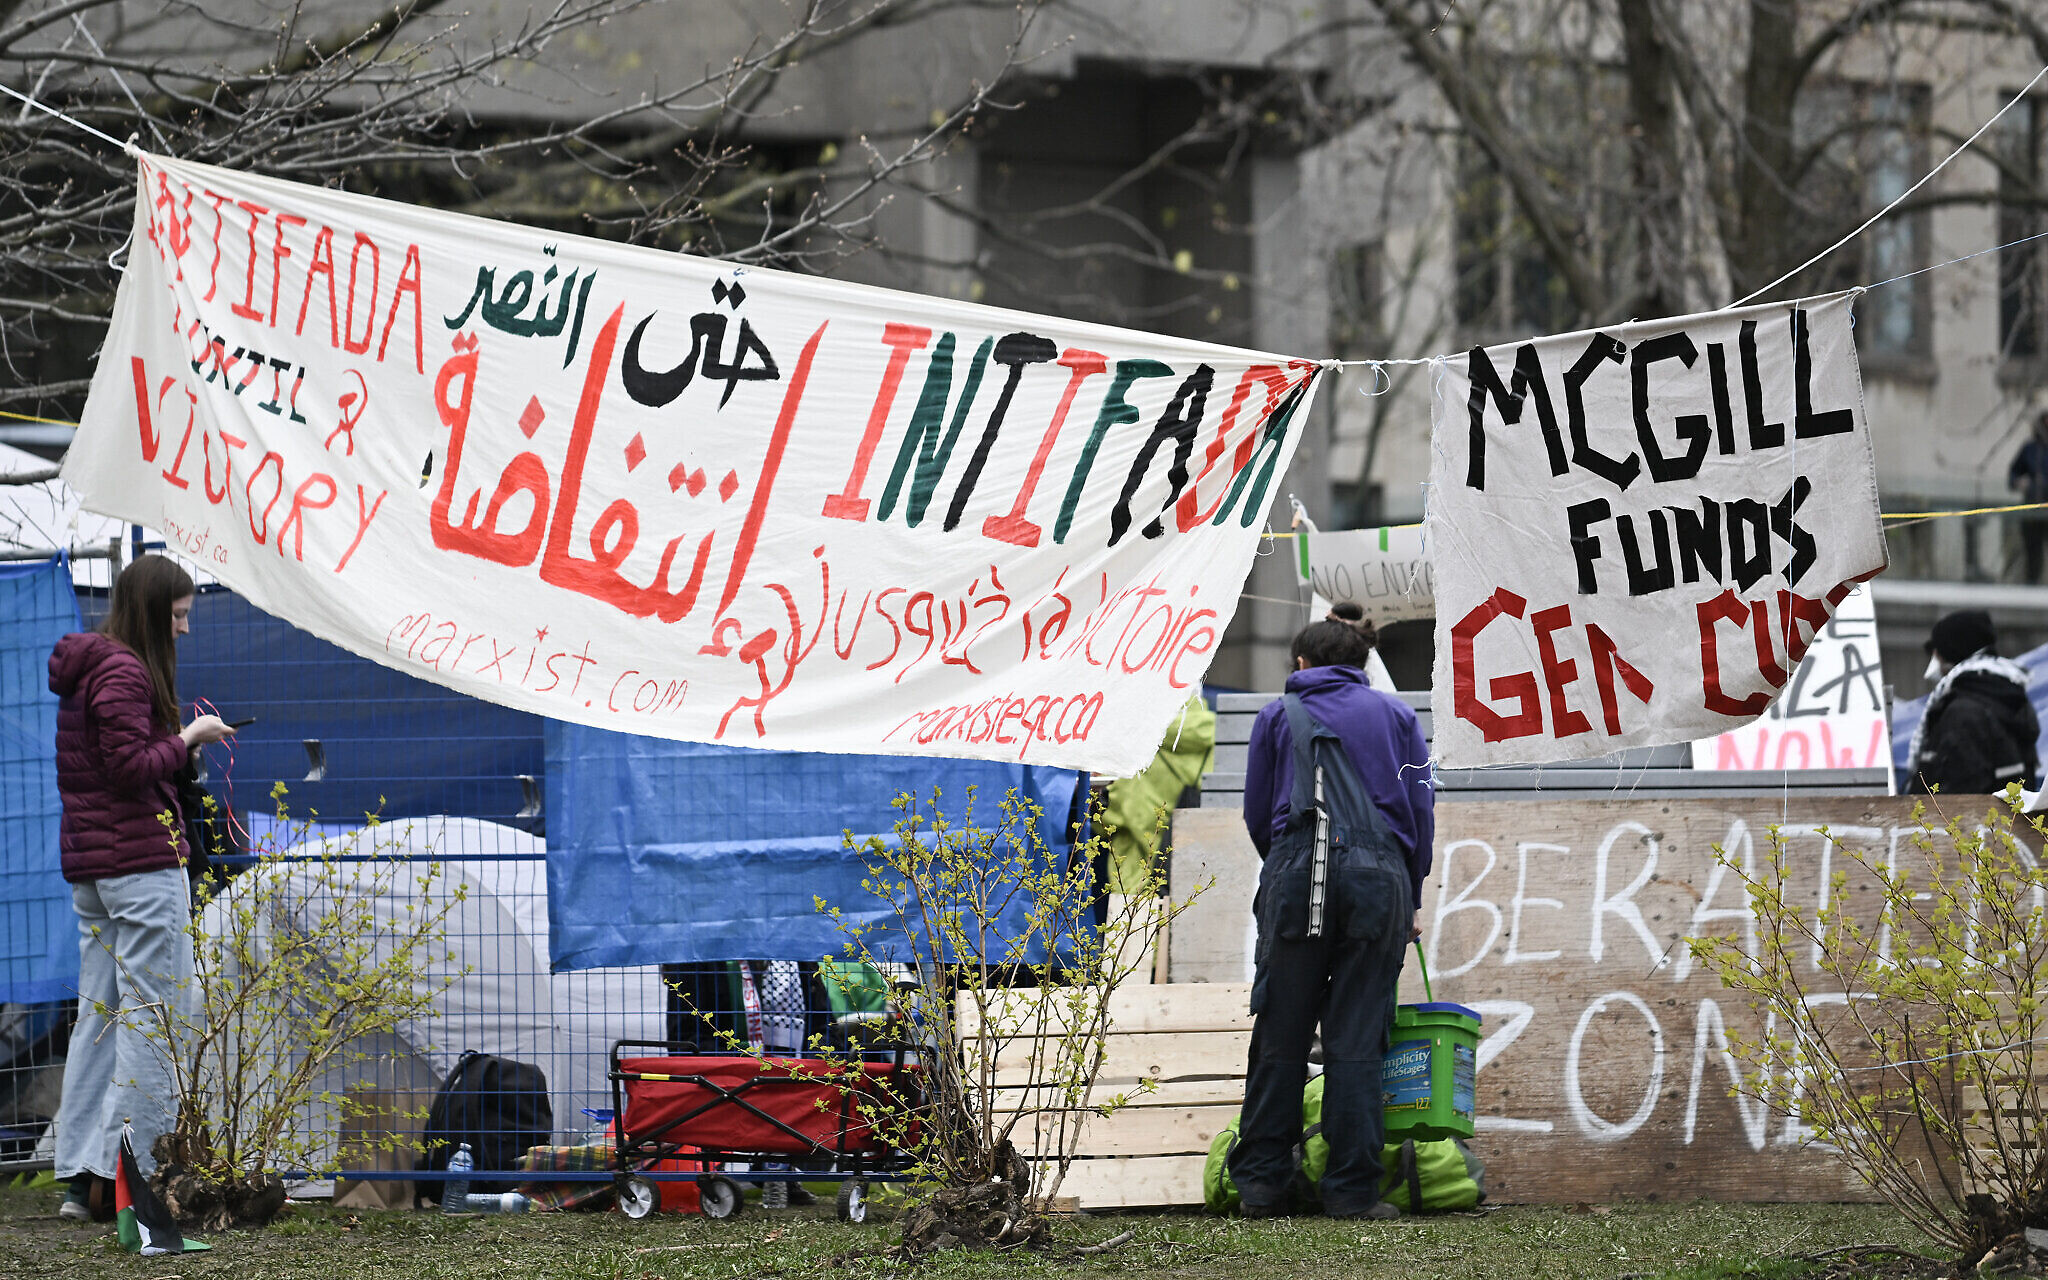 Quebec Premier calls for dismantling of McGill University's protest site (Credits: AFP)